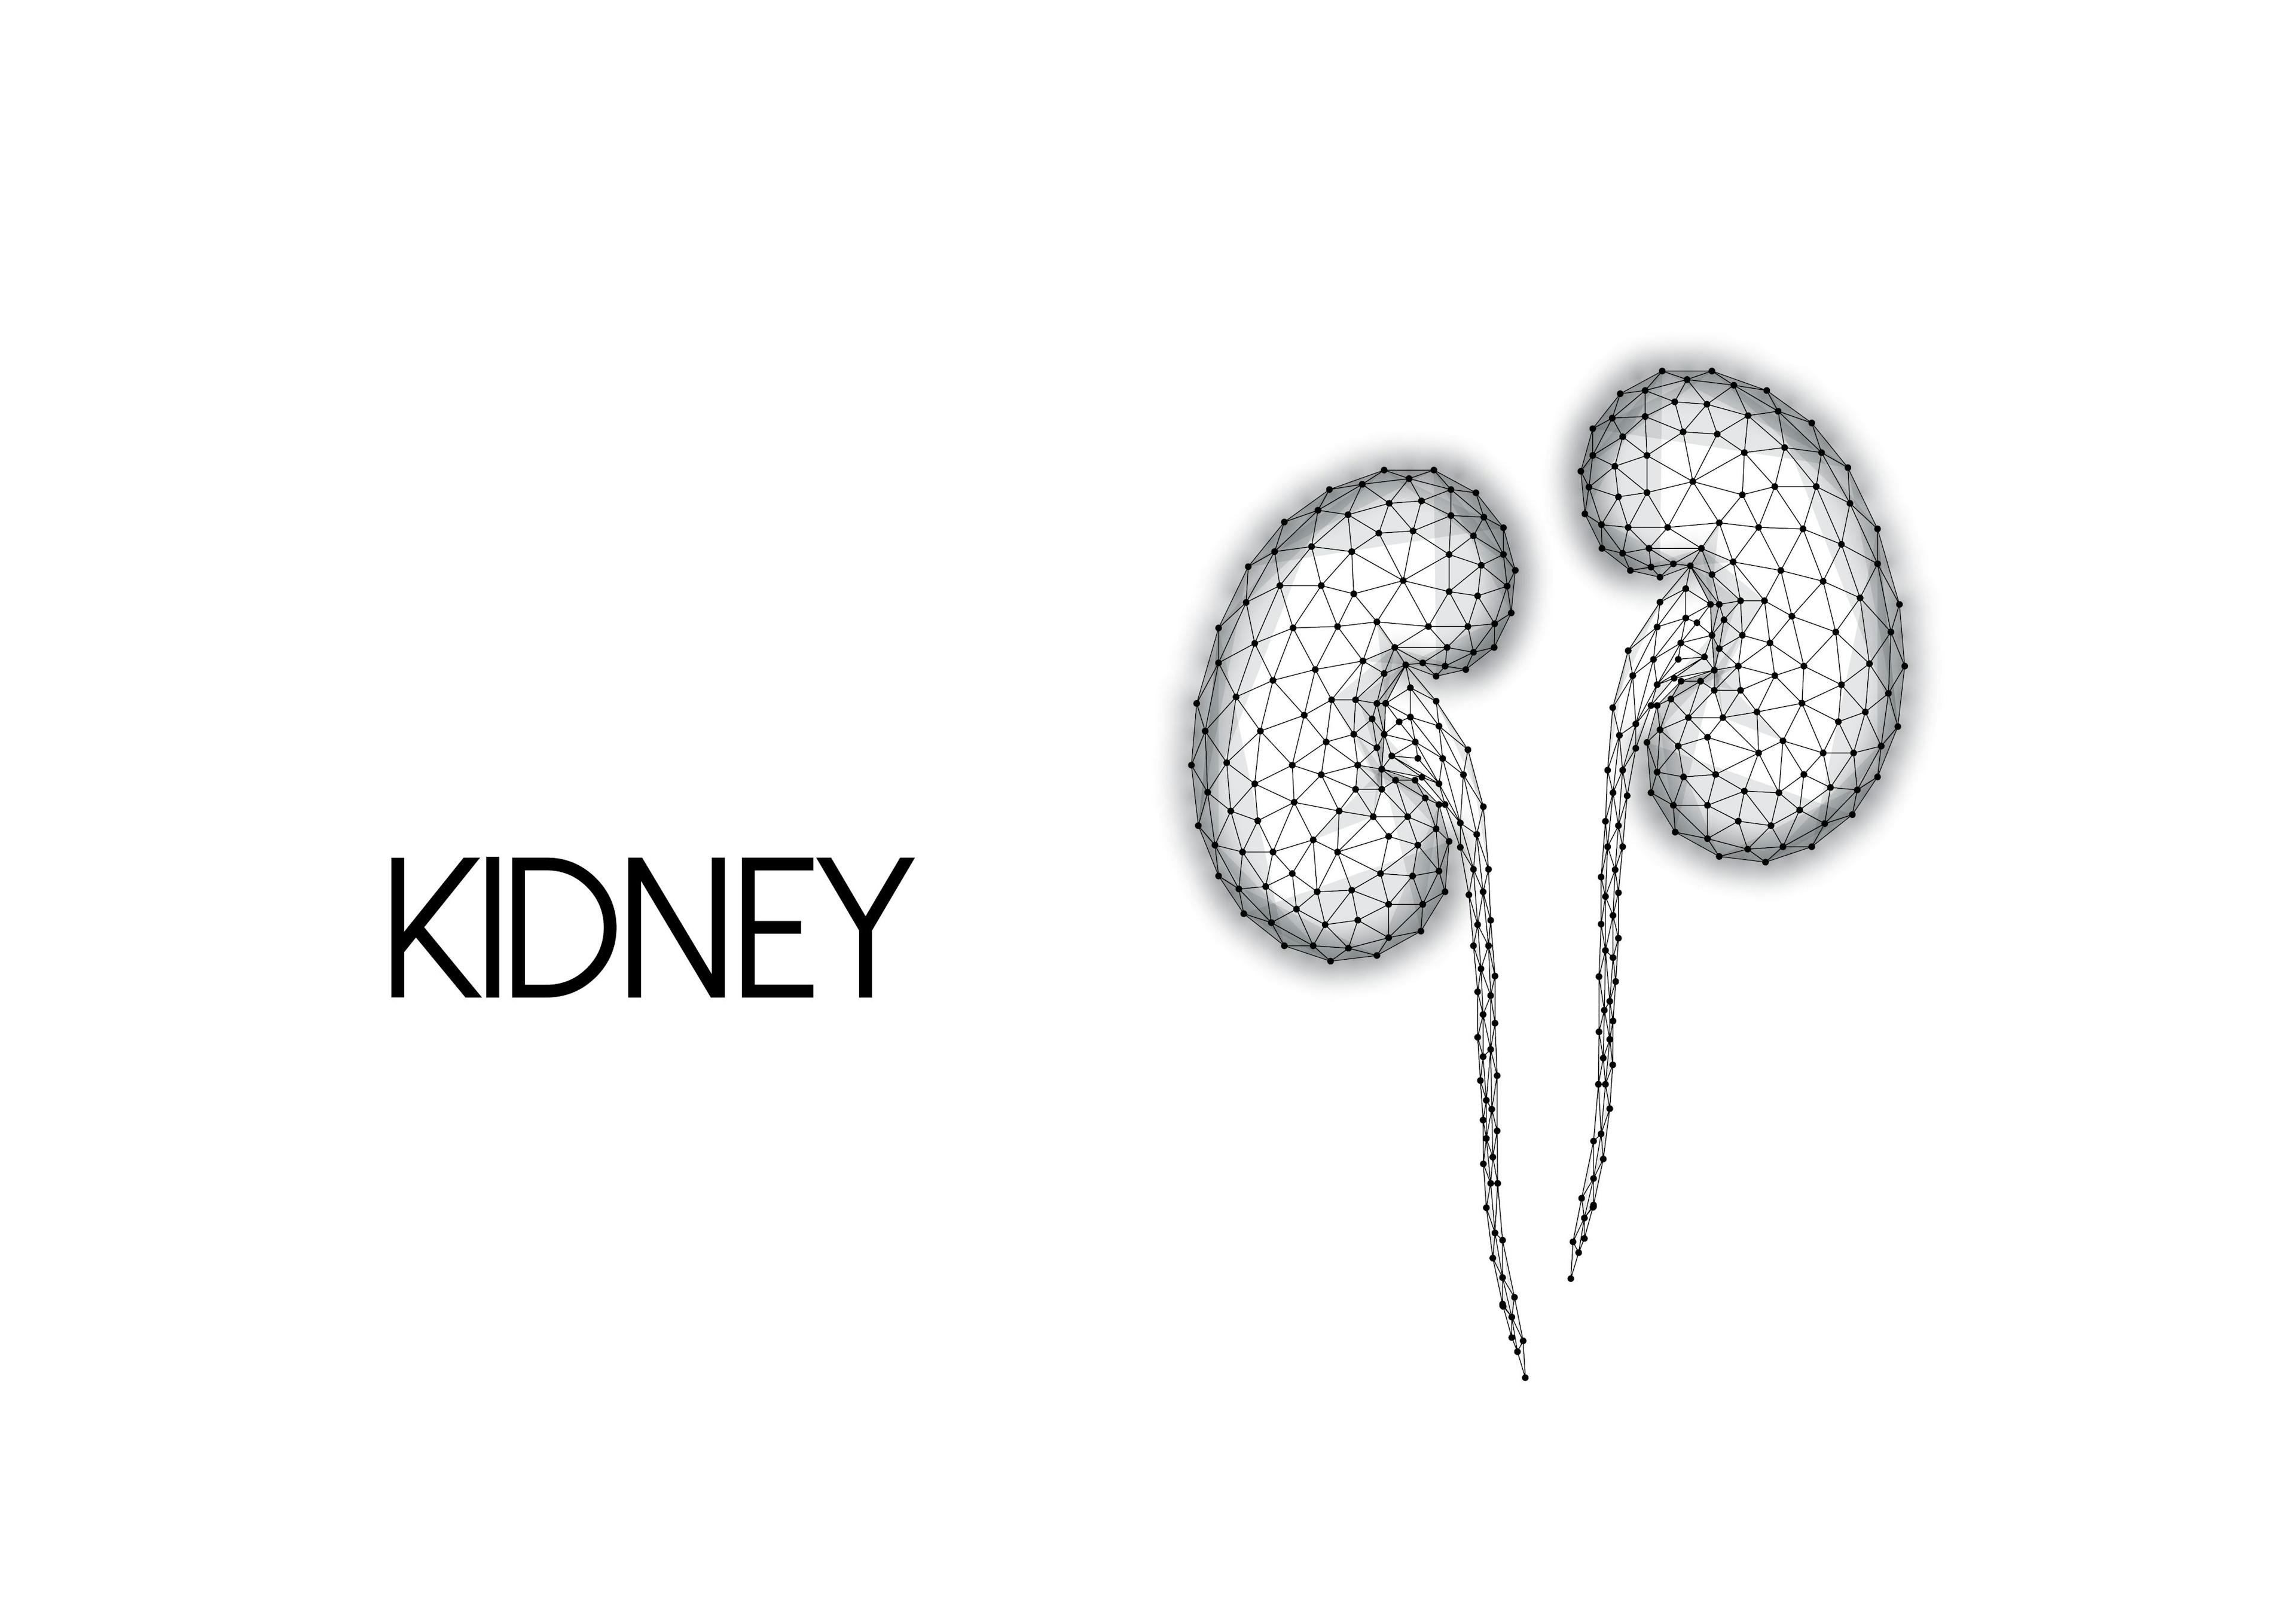 Kidney Concept White | image credit: Inna - stock.adobe.com